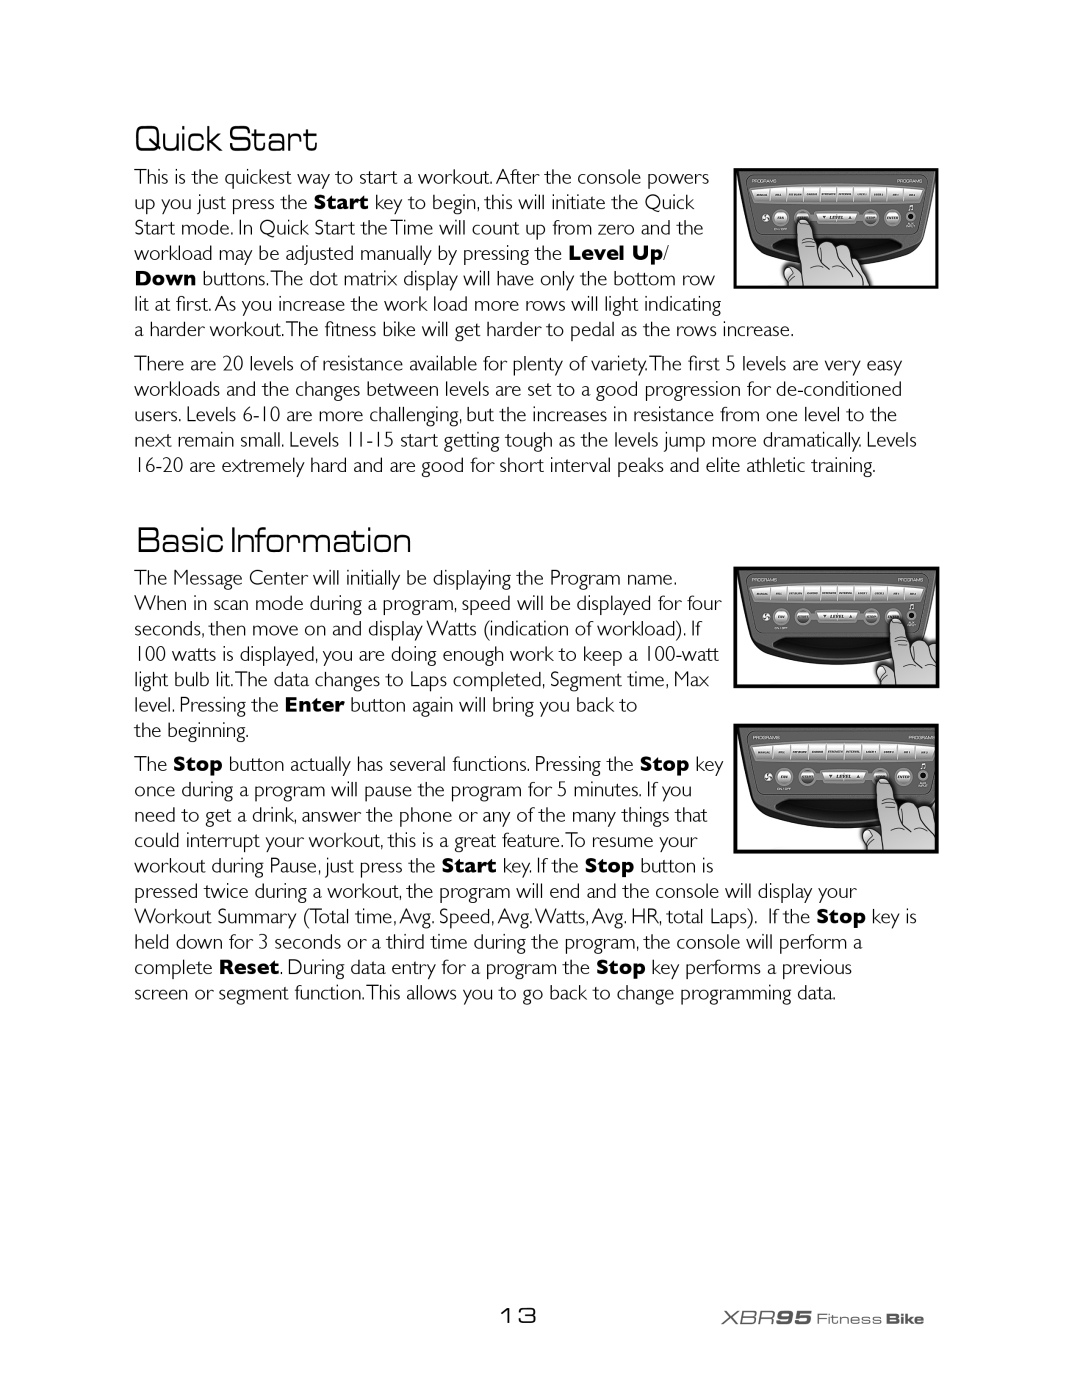 Spirit XBR95 owner manual Quick Start, Basic Information, the beginning 